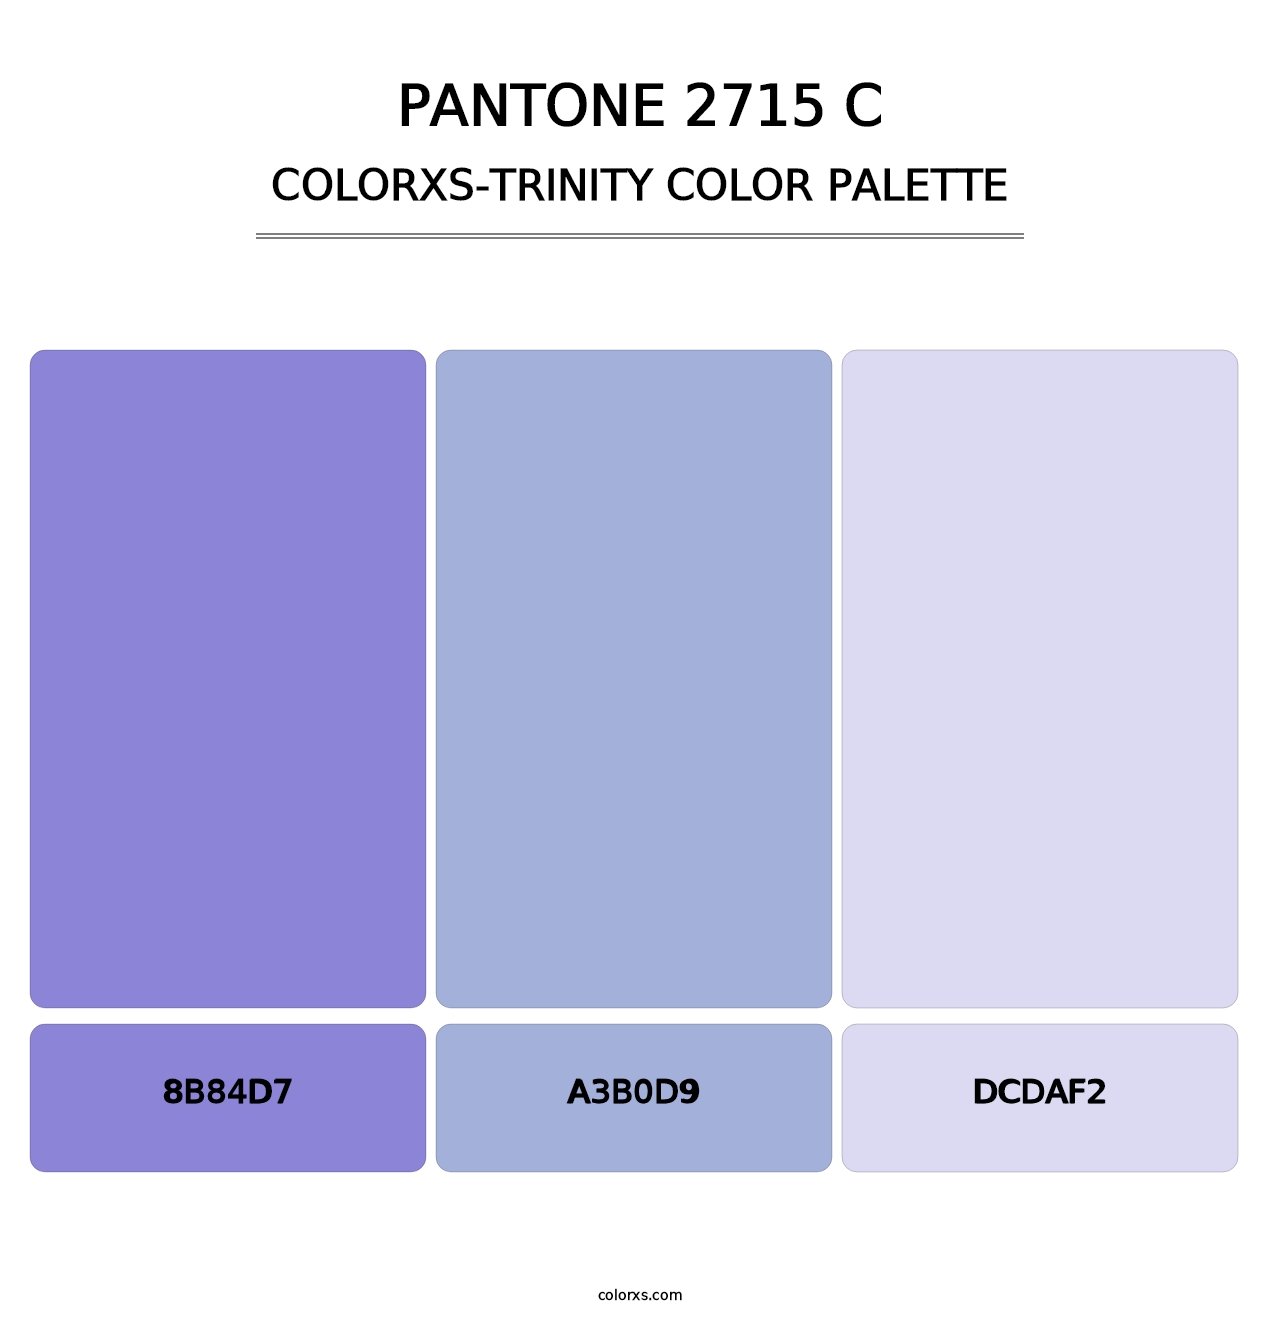 PANTONE 2715 C - Colorxs Trinity Palette